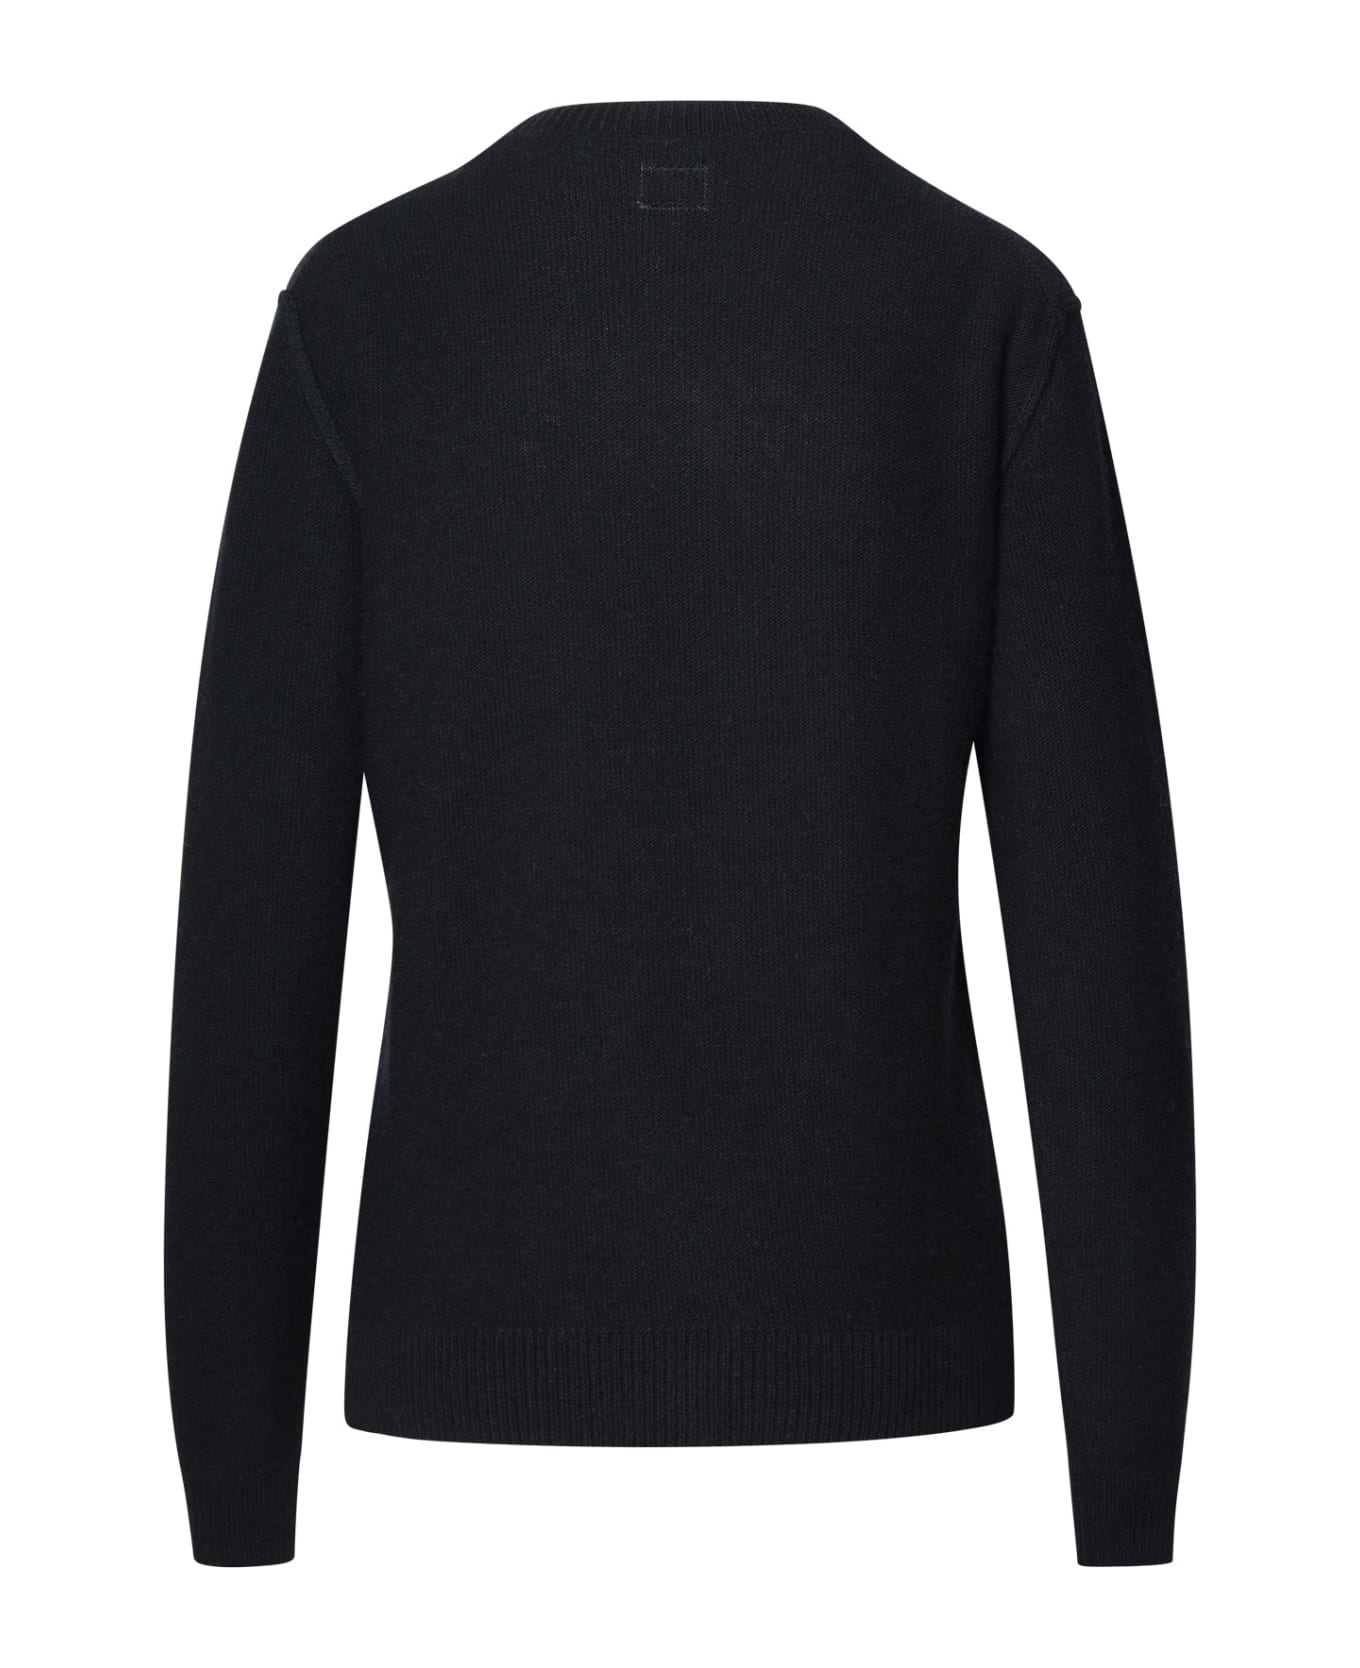 C.P. Company Black Wool Blend Sweater - Black